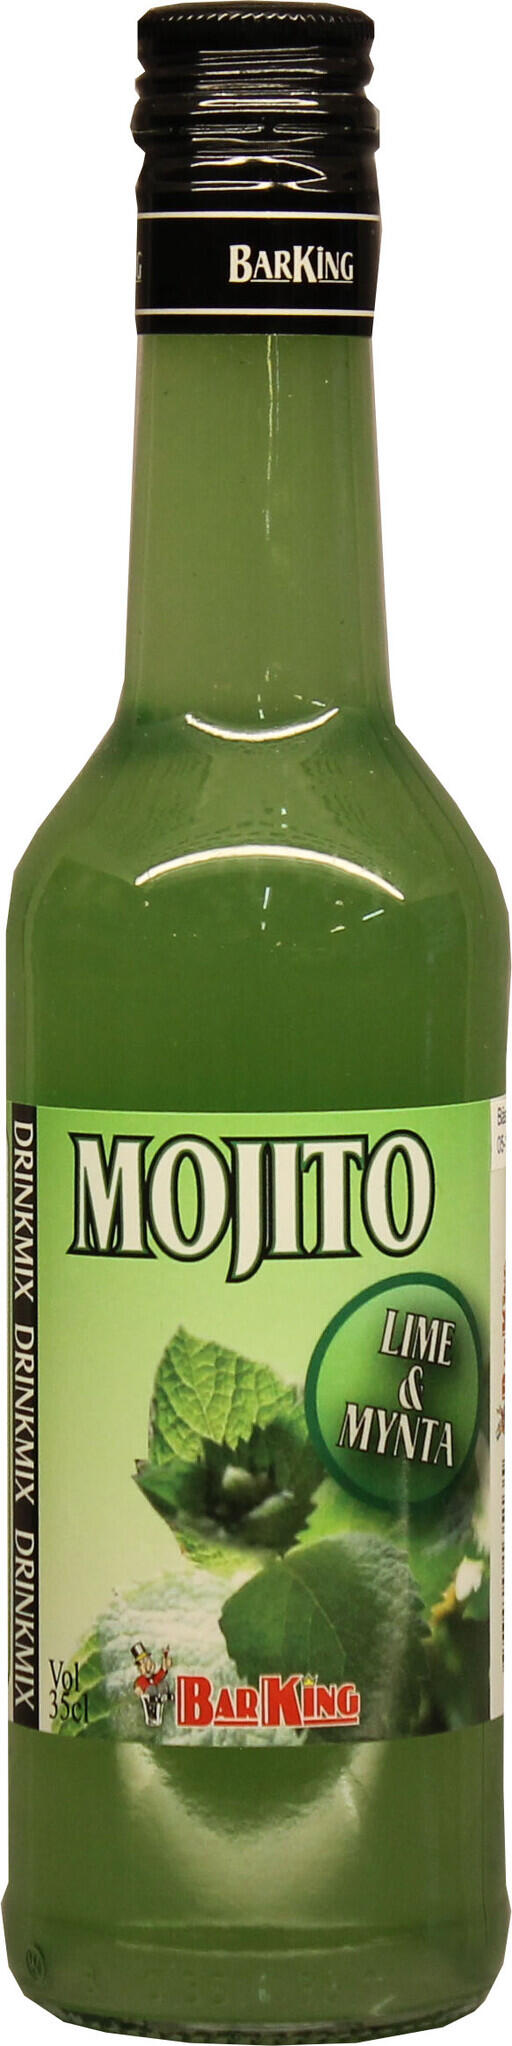 Blanda goda Mojitos med denna goda drinkmix.